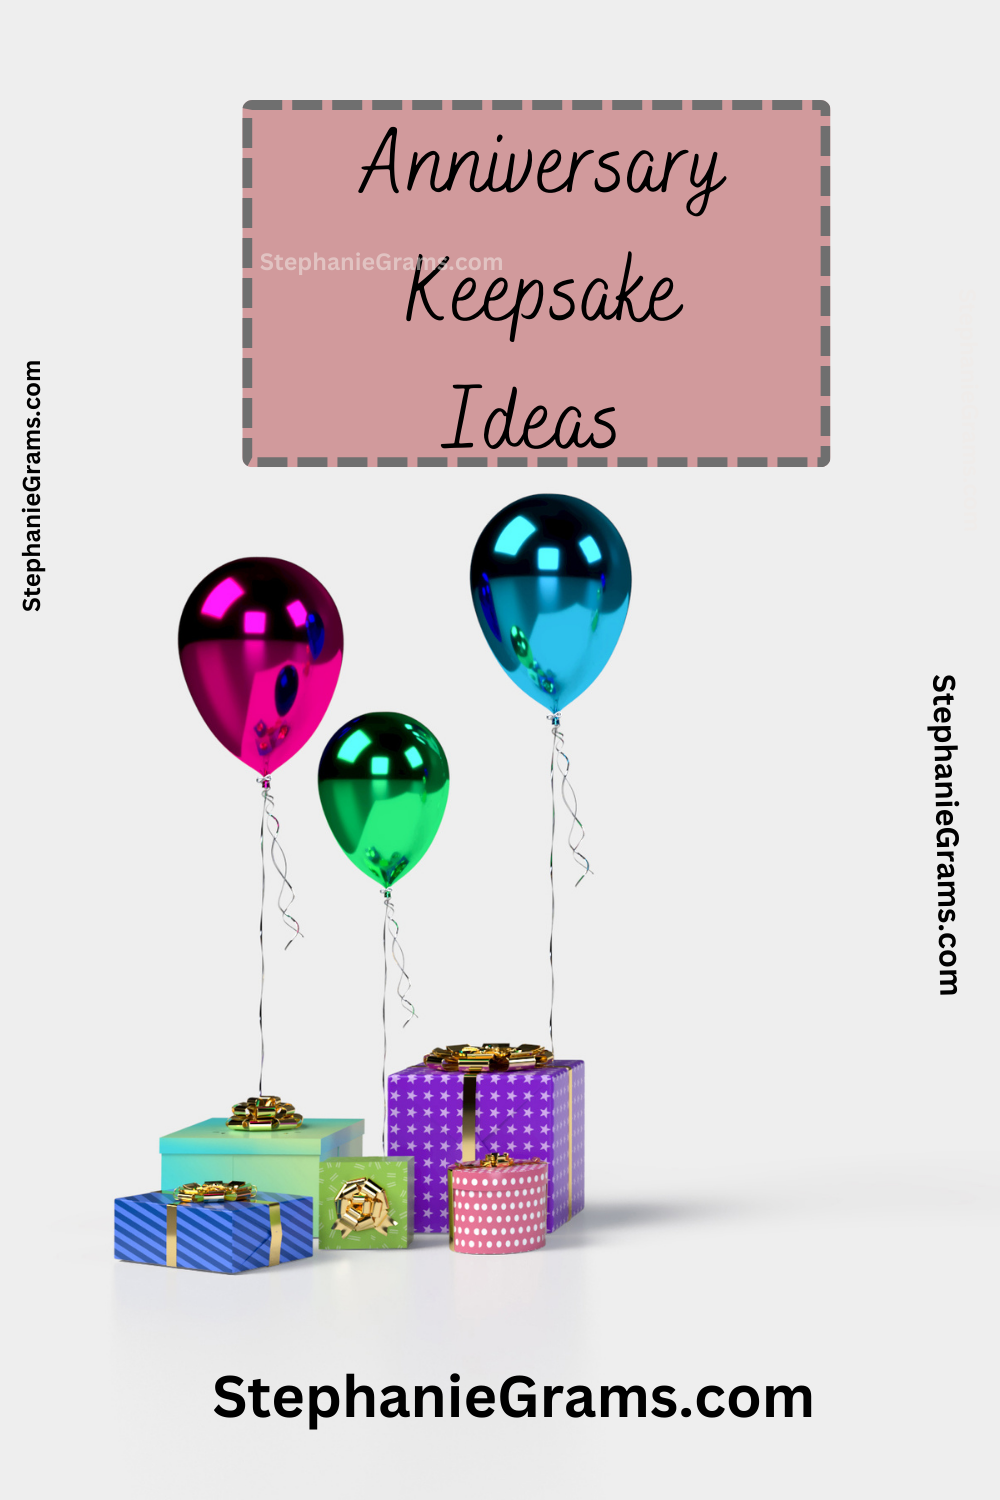 8 Reasons to Start a Keepsake Business